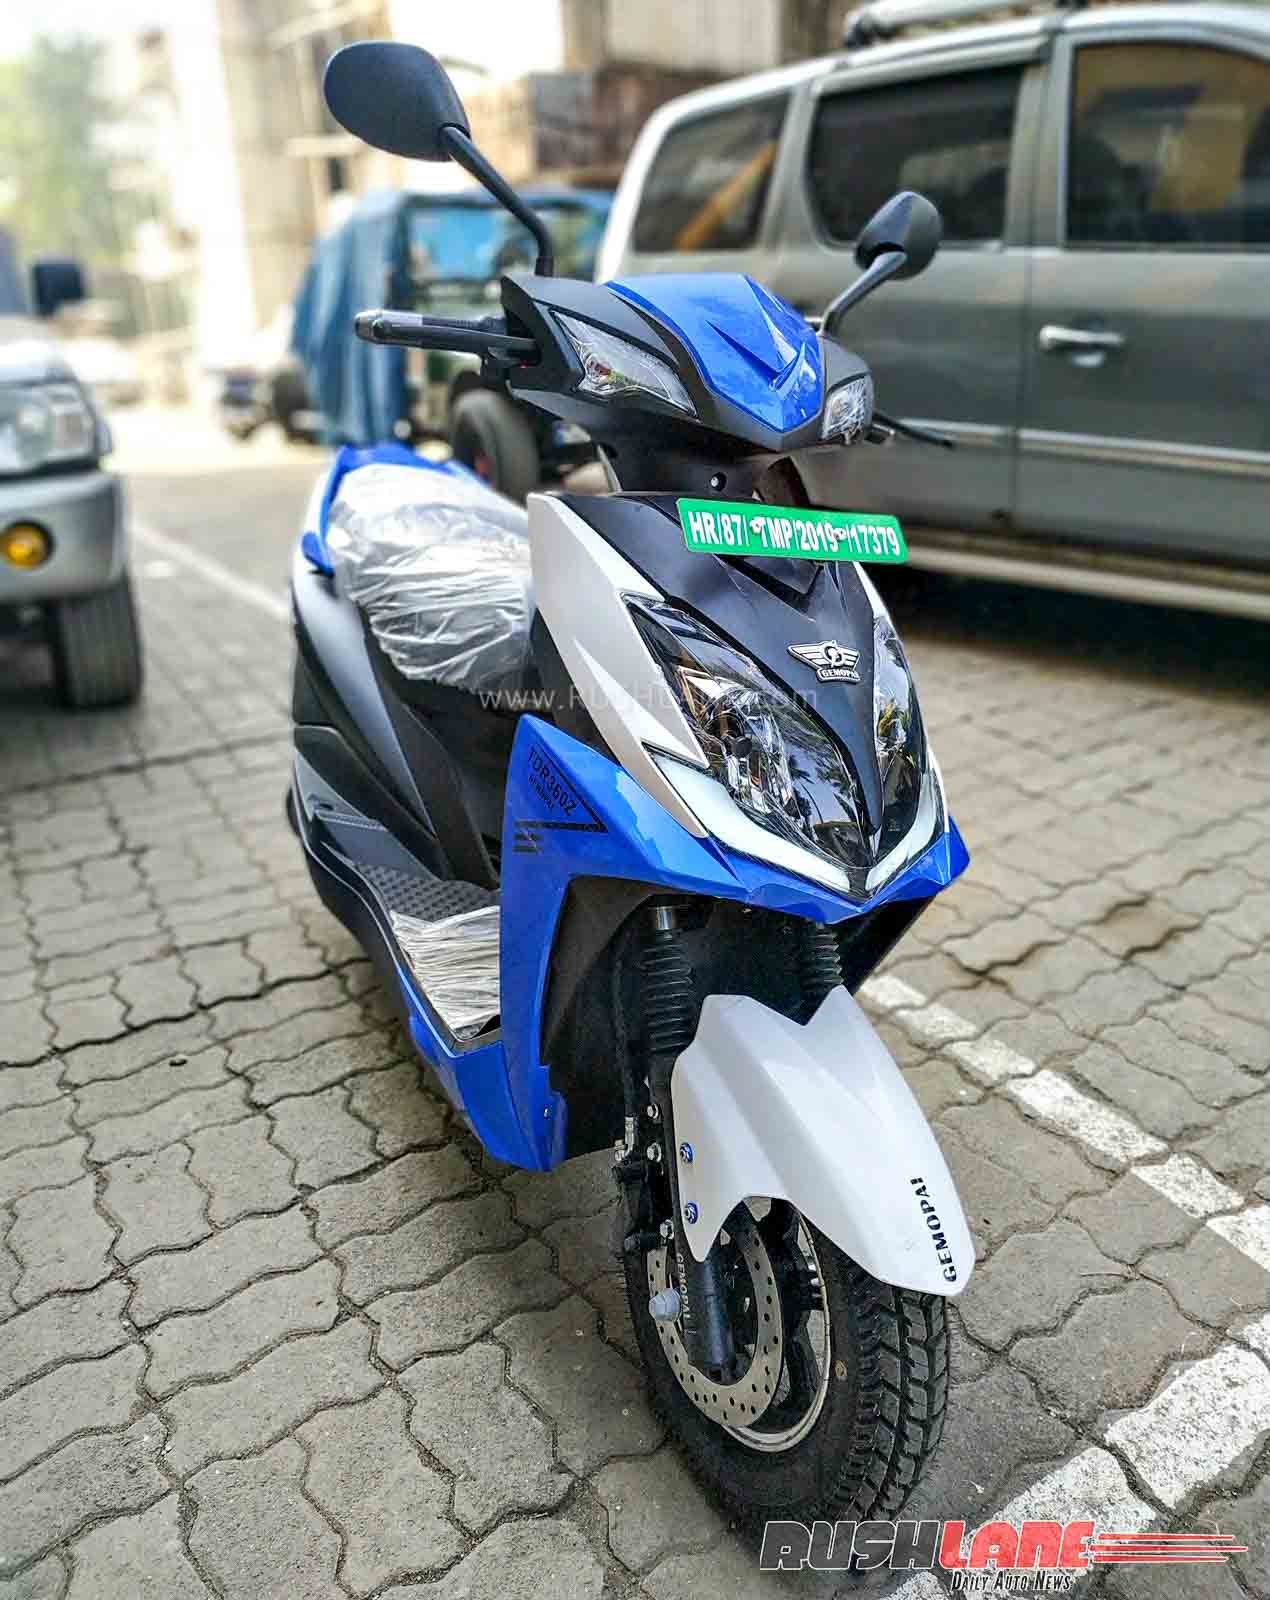 Gemopai electric scooter review